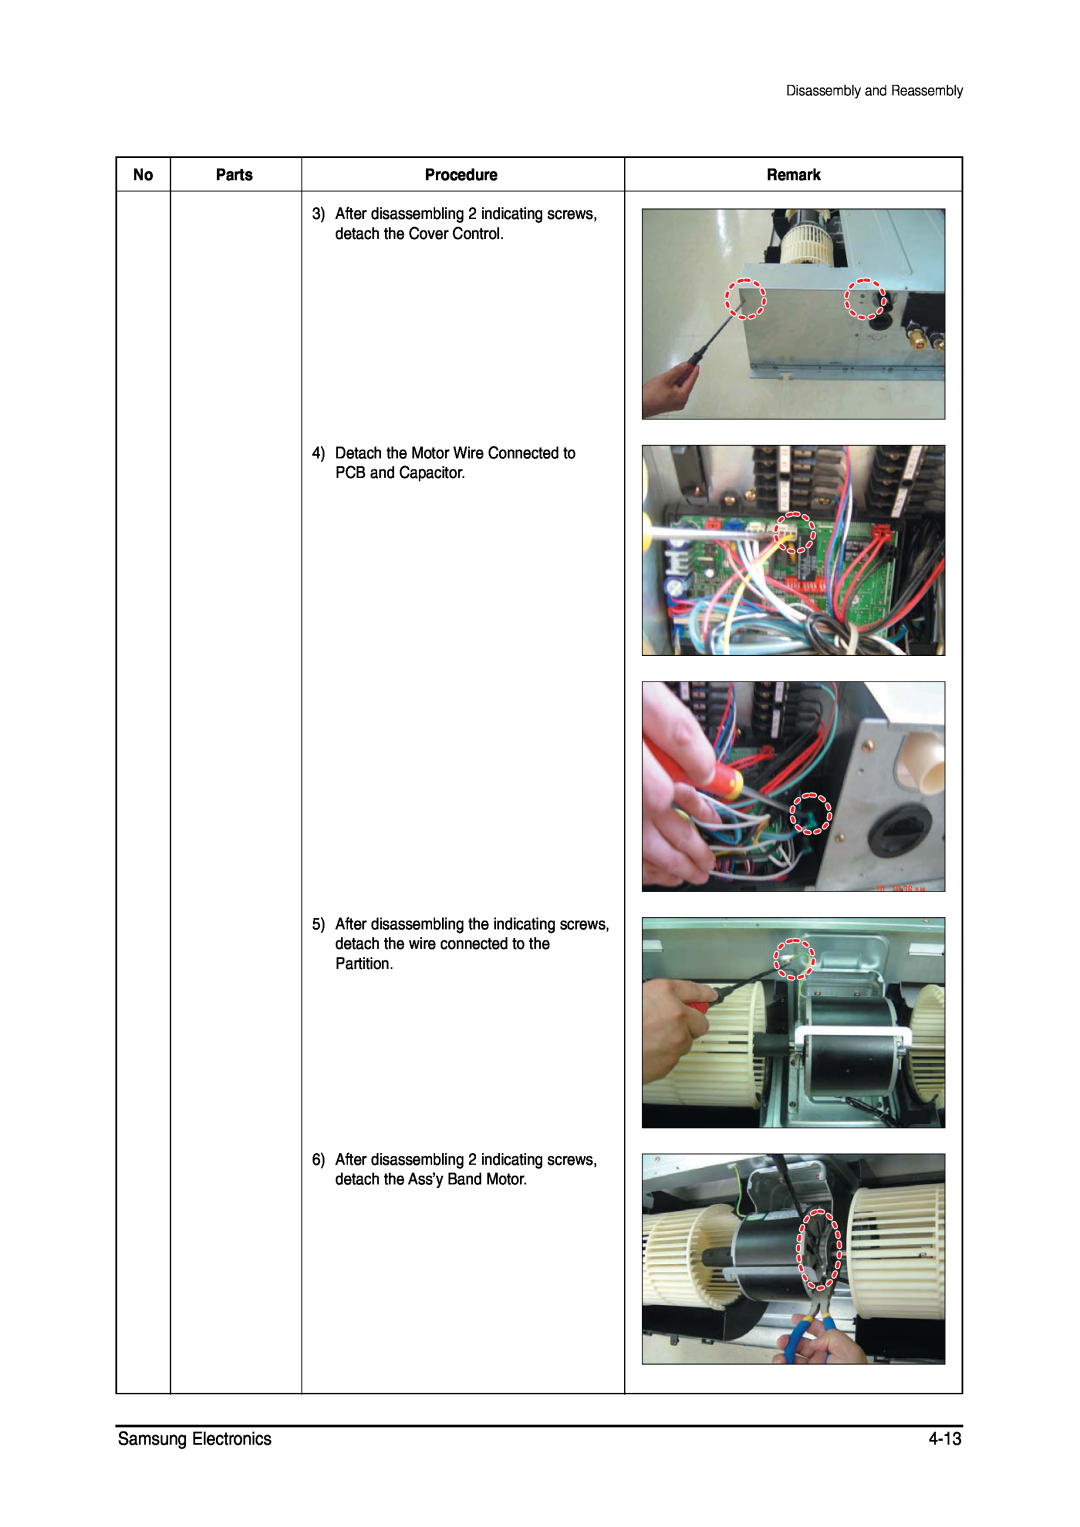 Samsung MH026FNCA service manual Samsung Electronics, 4-13, Parts, Procedure 